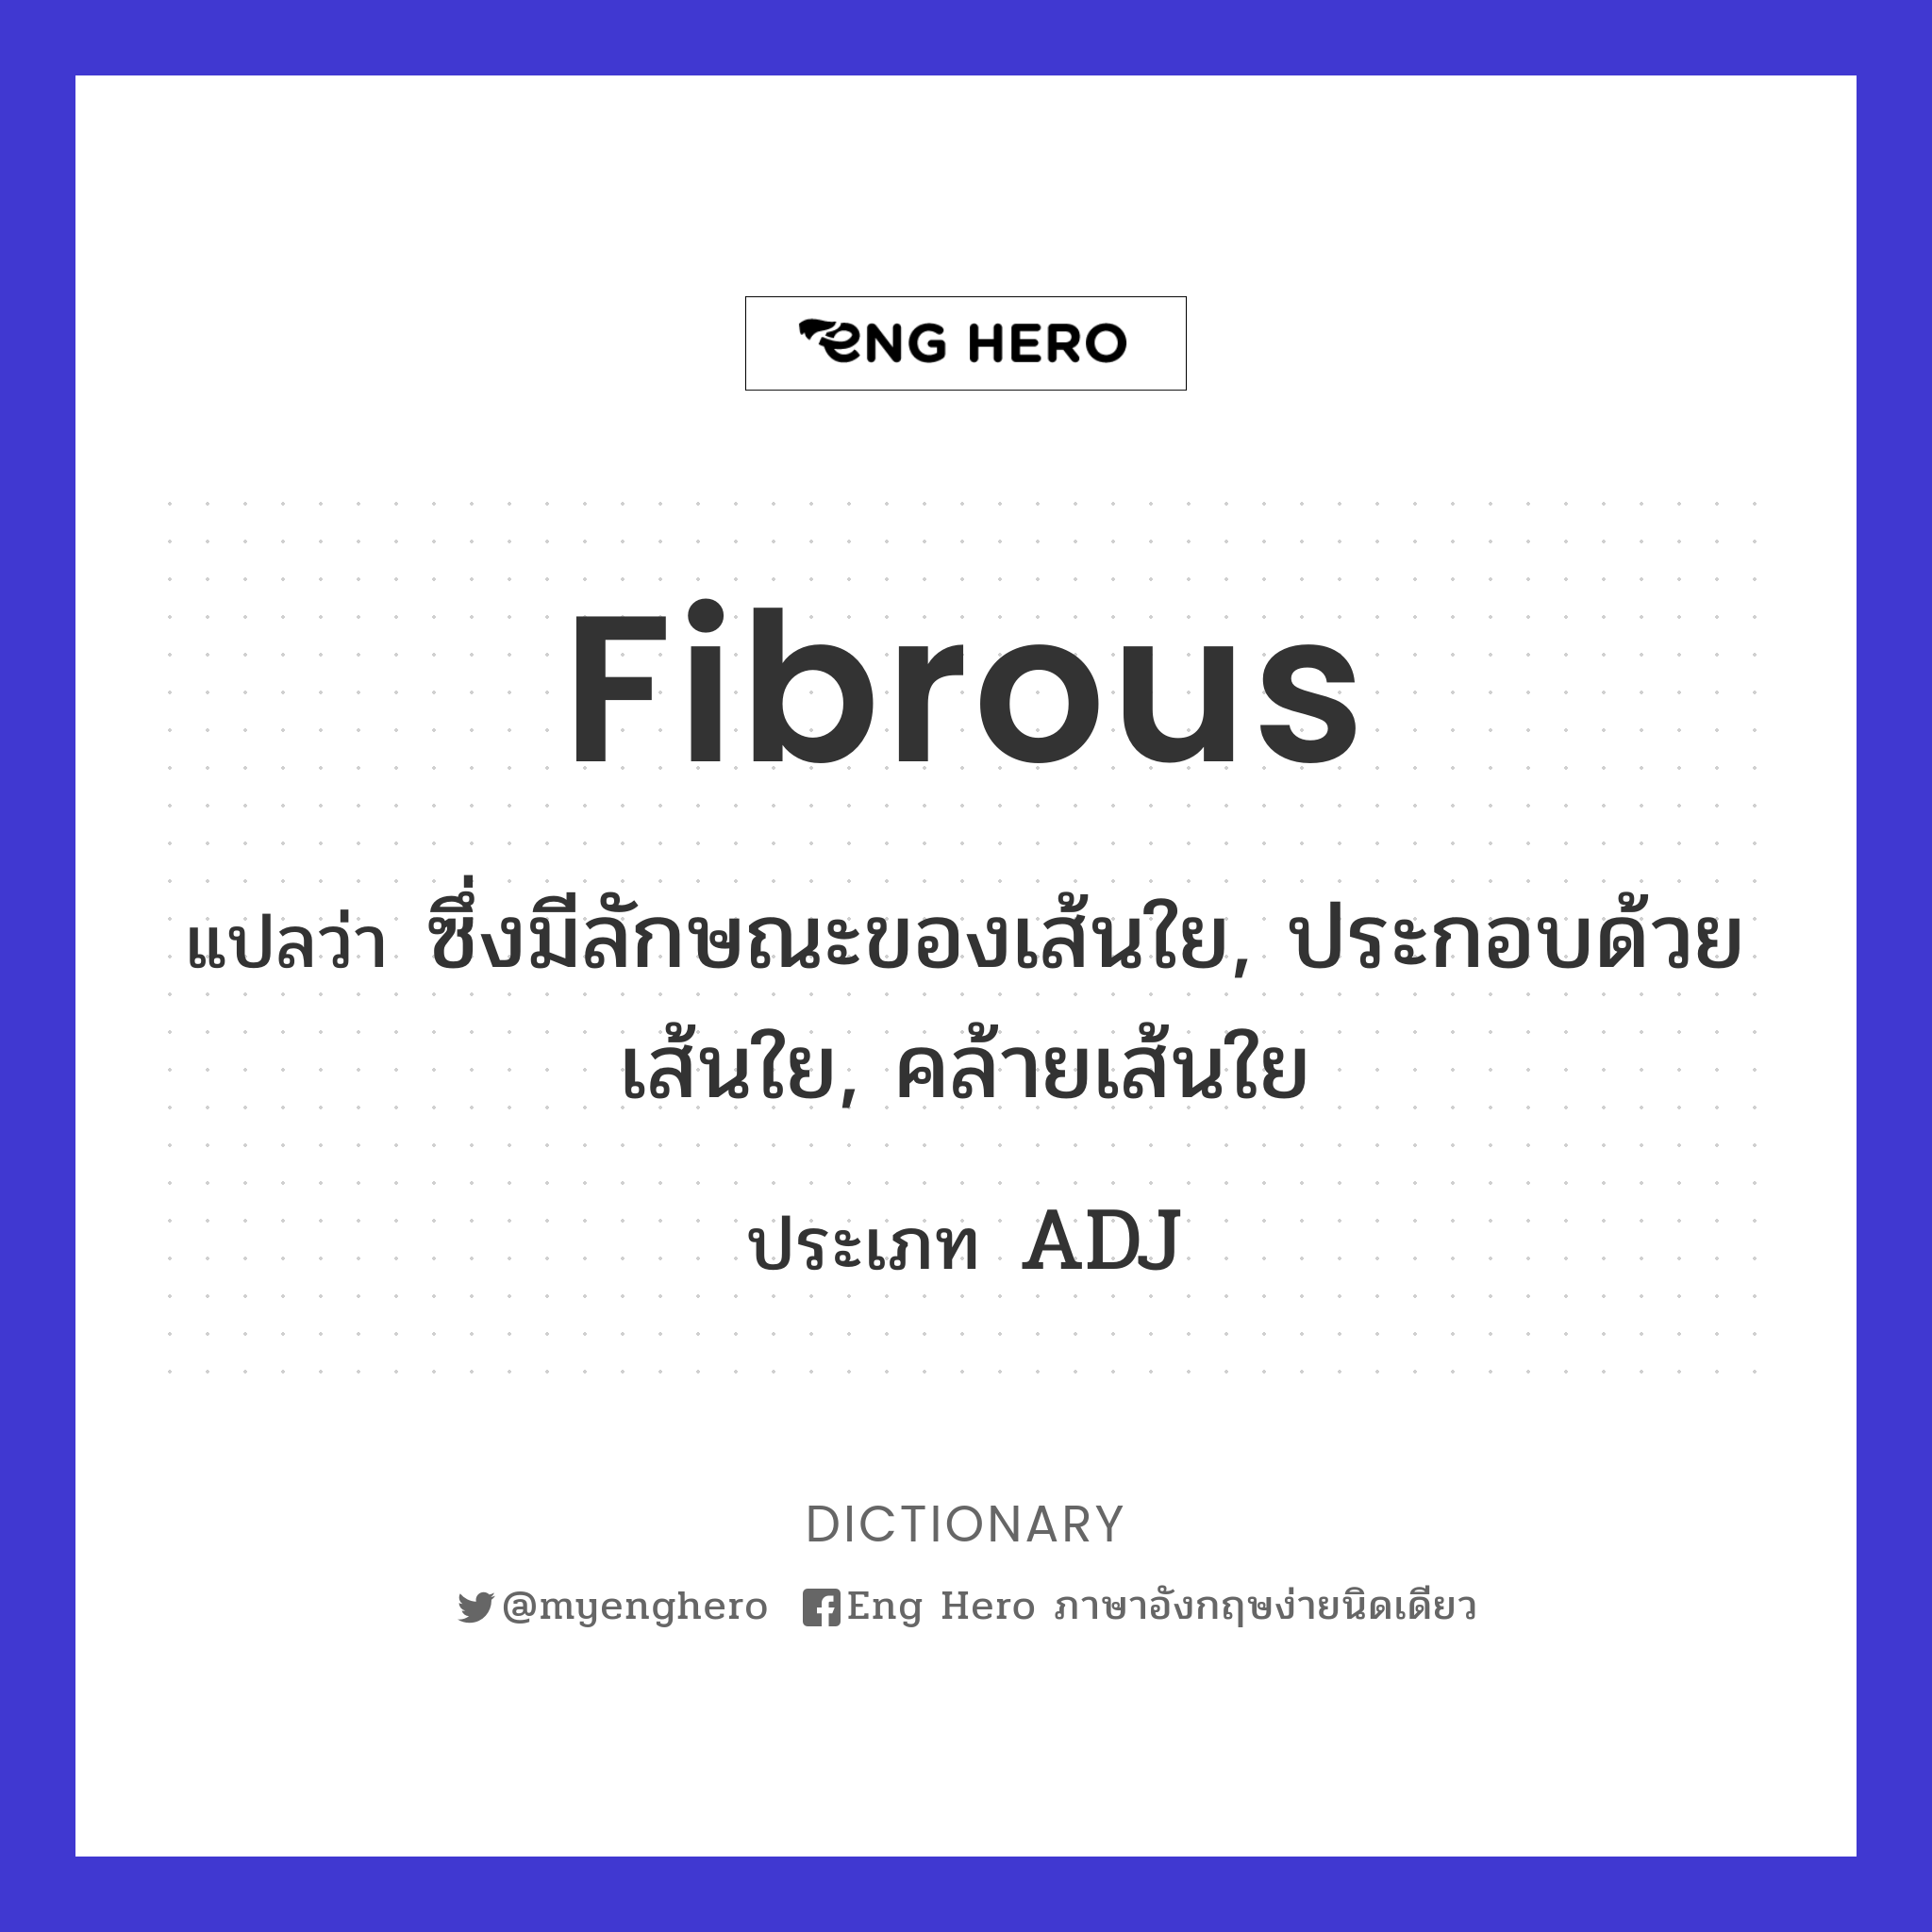 fibrous